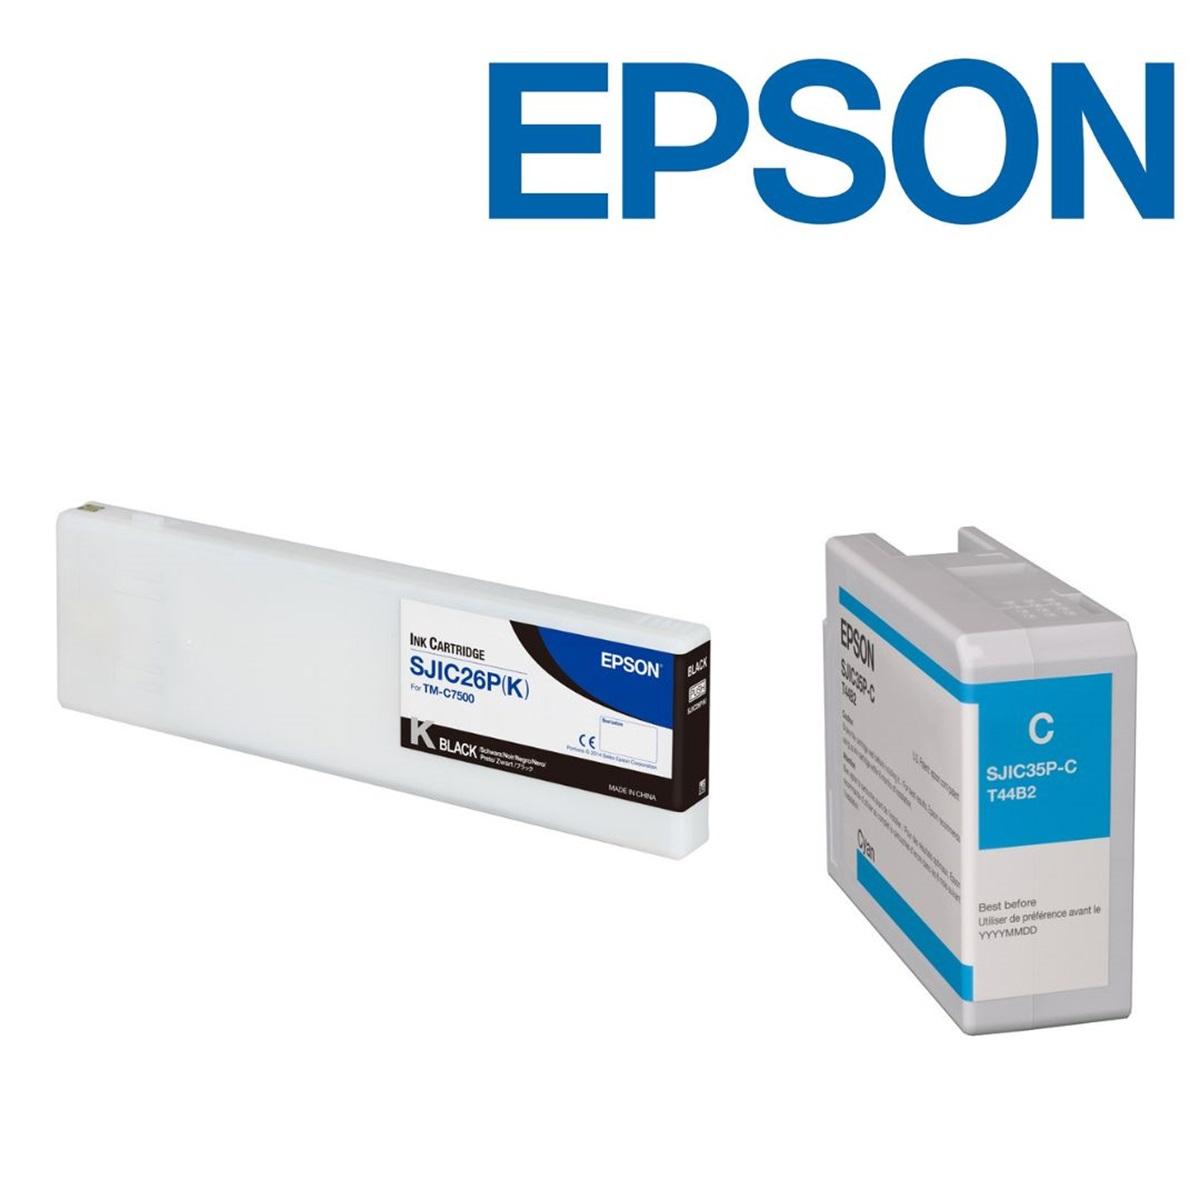 Epson ColorWorks Label Ink